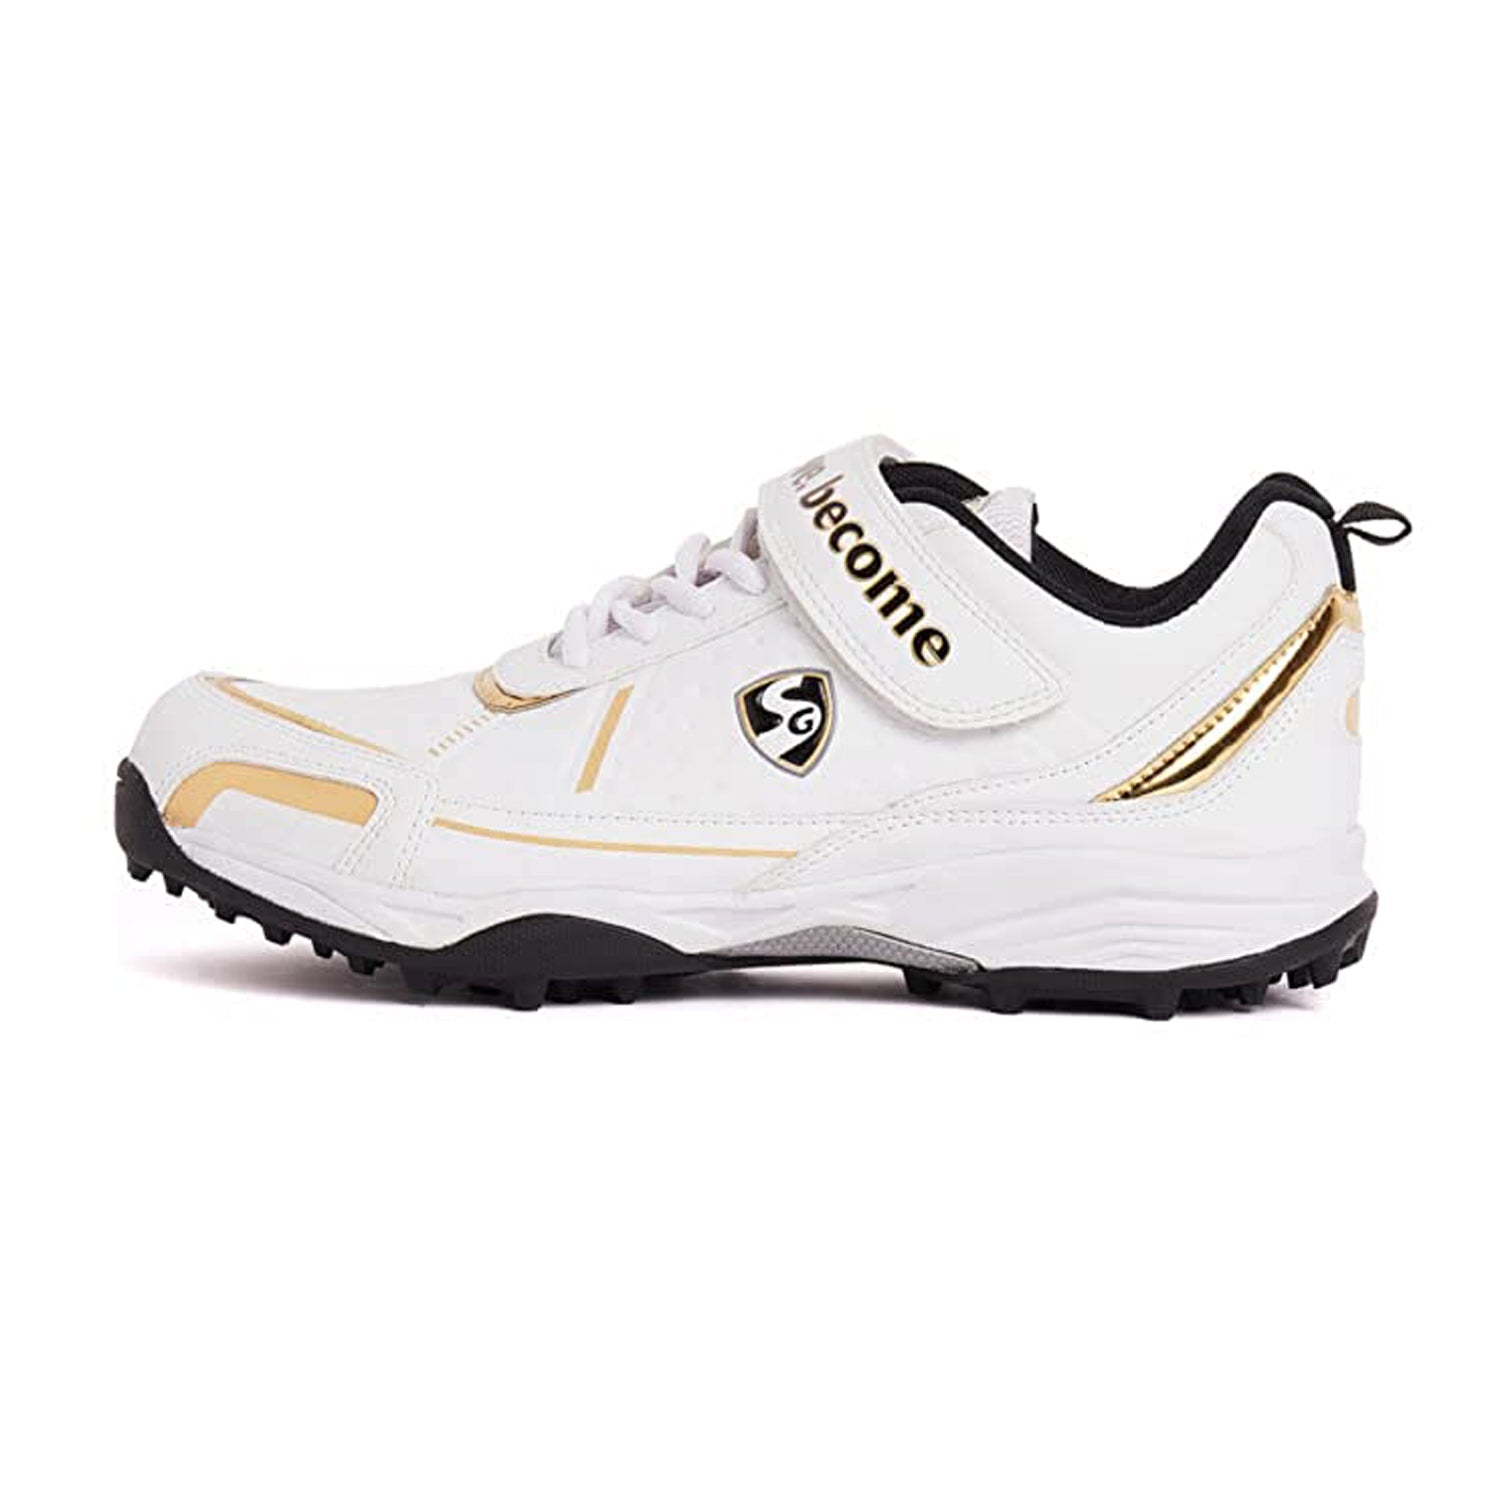 SG Century 5.0 Cricket Shoes - Best Price online Prokicksports.com